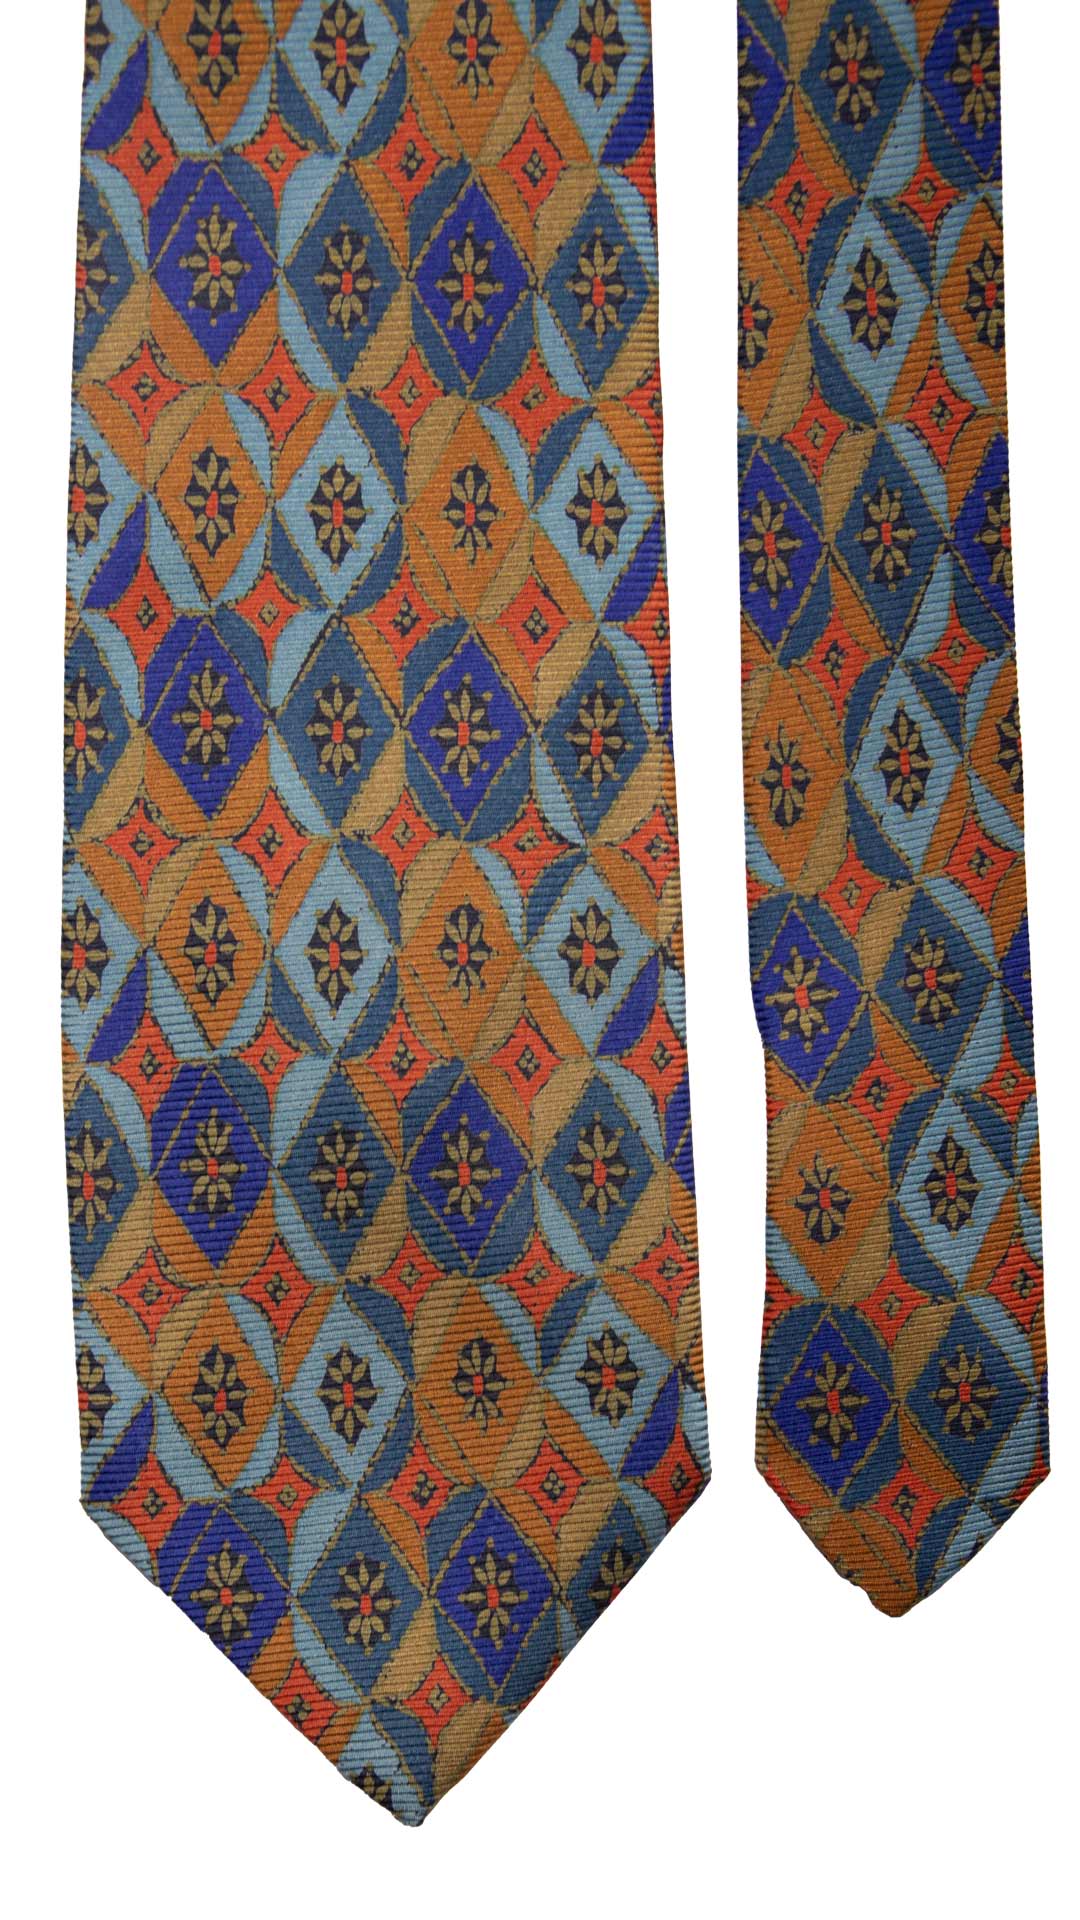 Cravatta Vintage in Saia di Seta Celeste Fantasia Blu Arancione Color Corda CV813 Pala